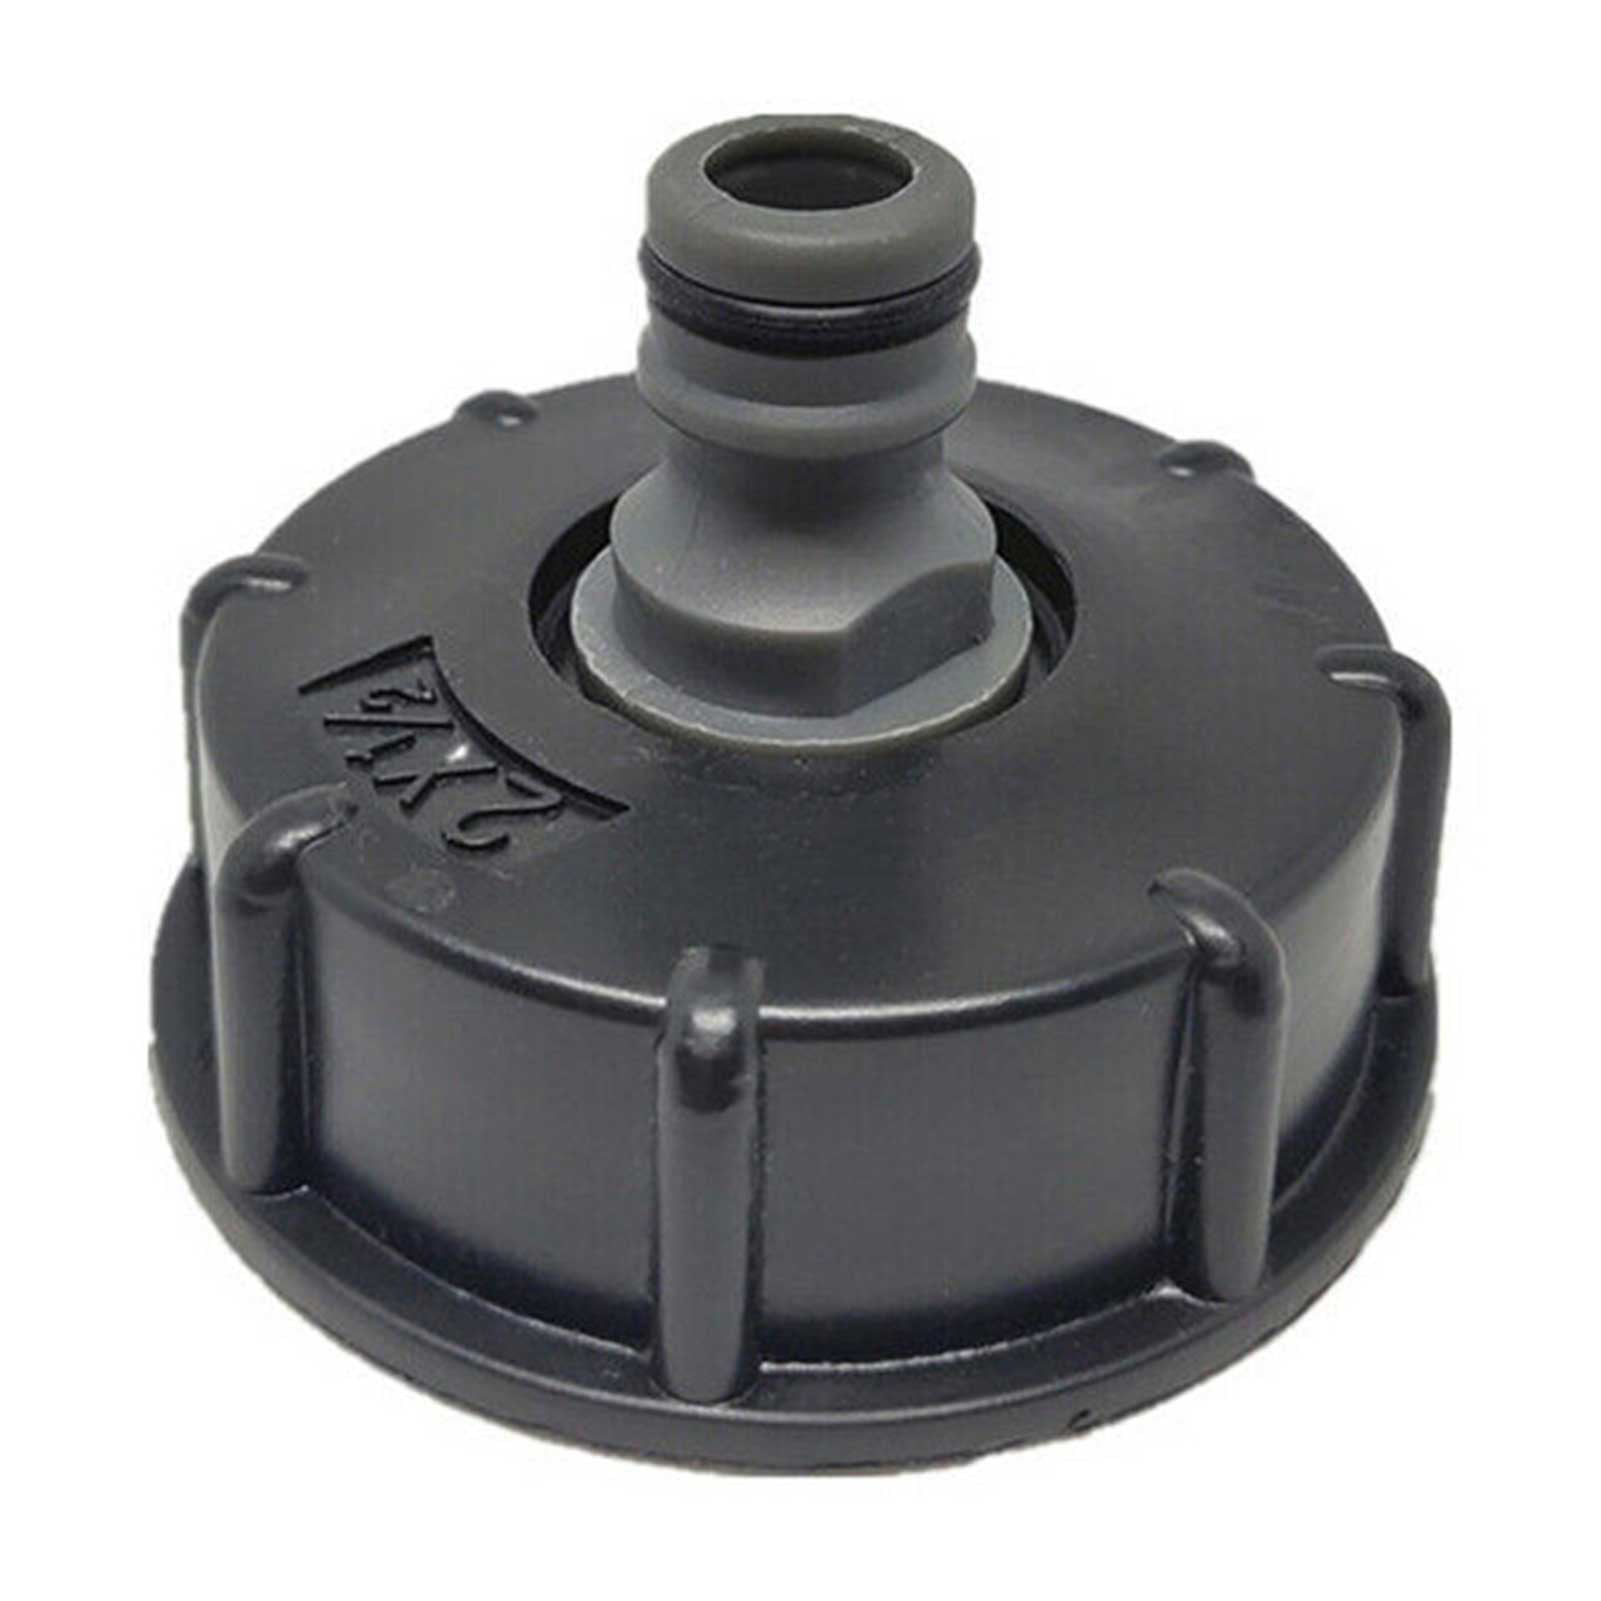 IBC Tank Adapter Adaptor Connector Tap Hose Hoze Cap Water Bowser Standard Fit 